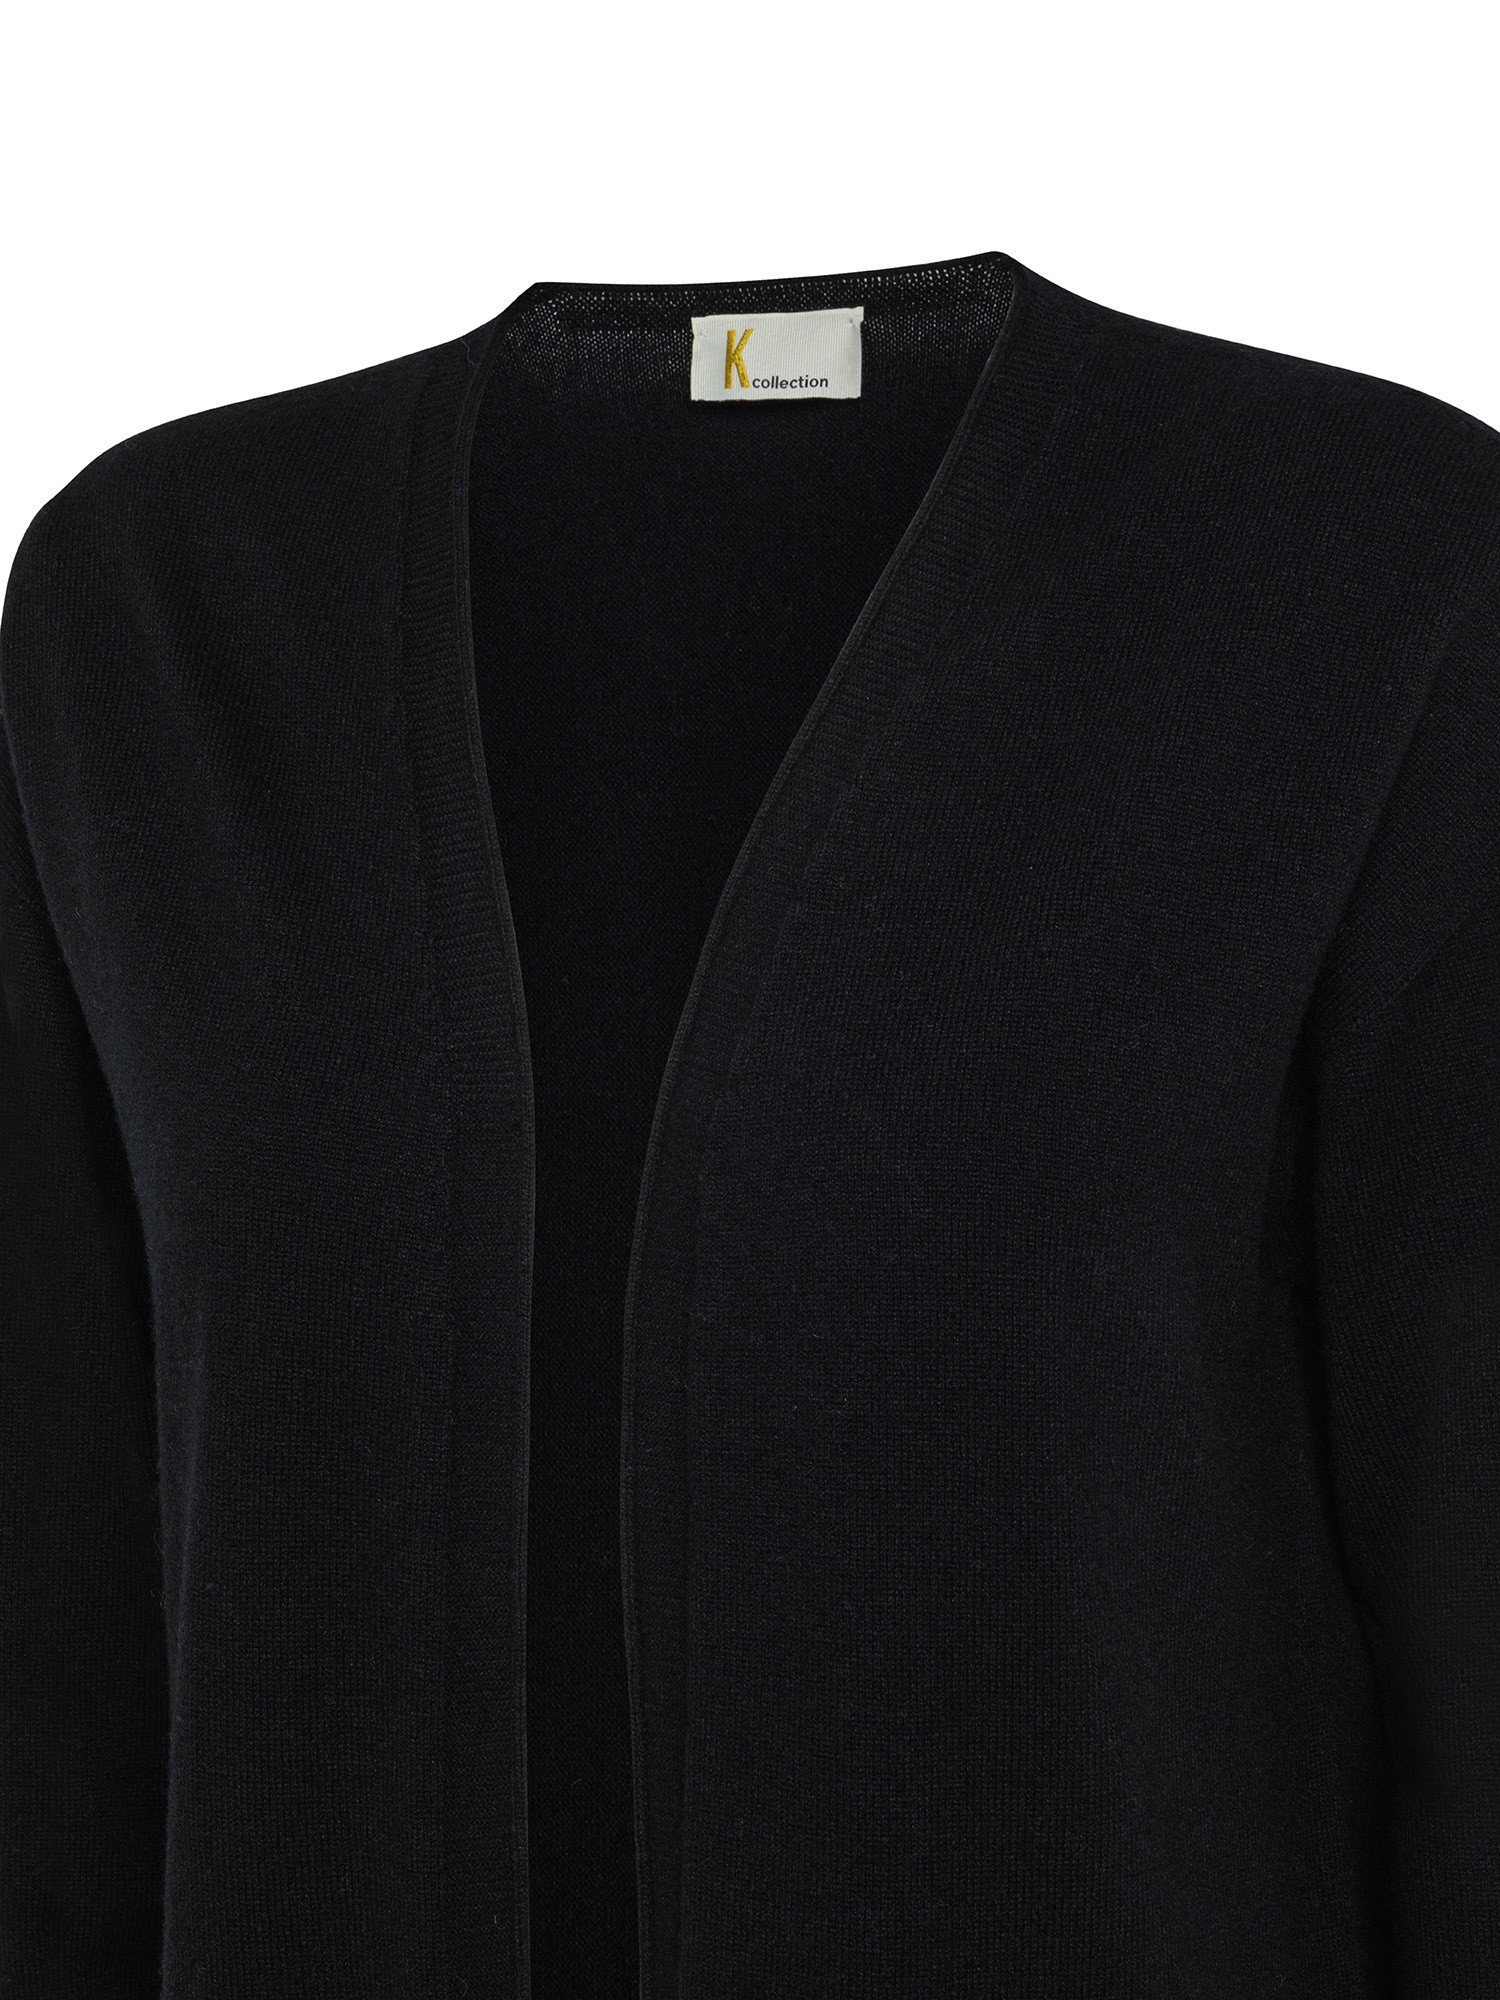 K Collection - Long cardigan, Black, large image number 2